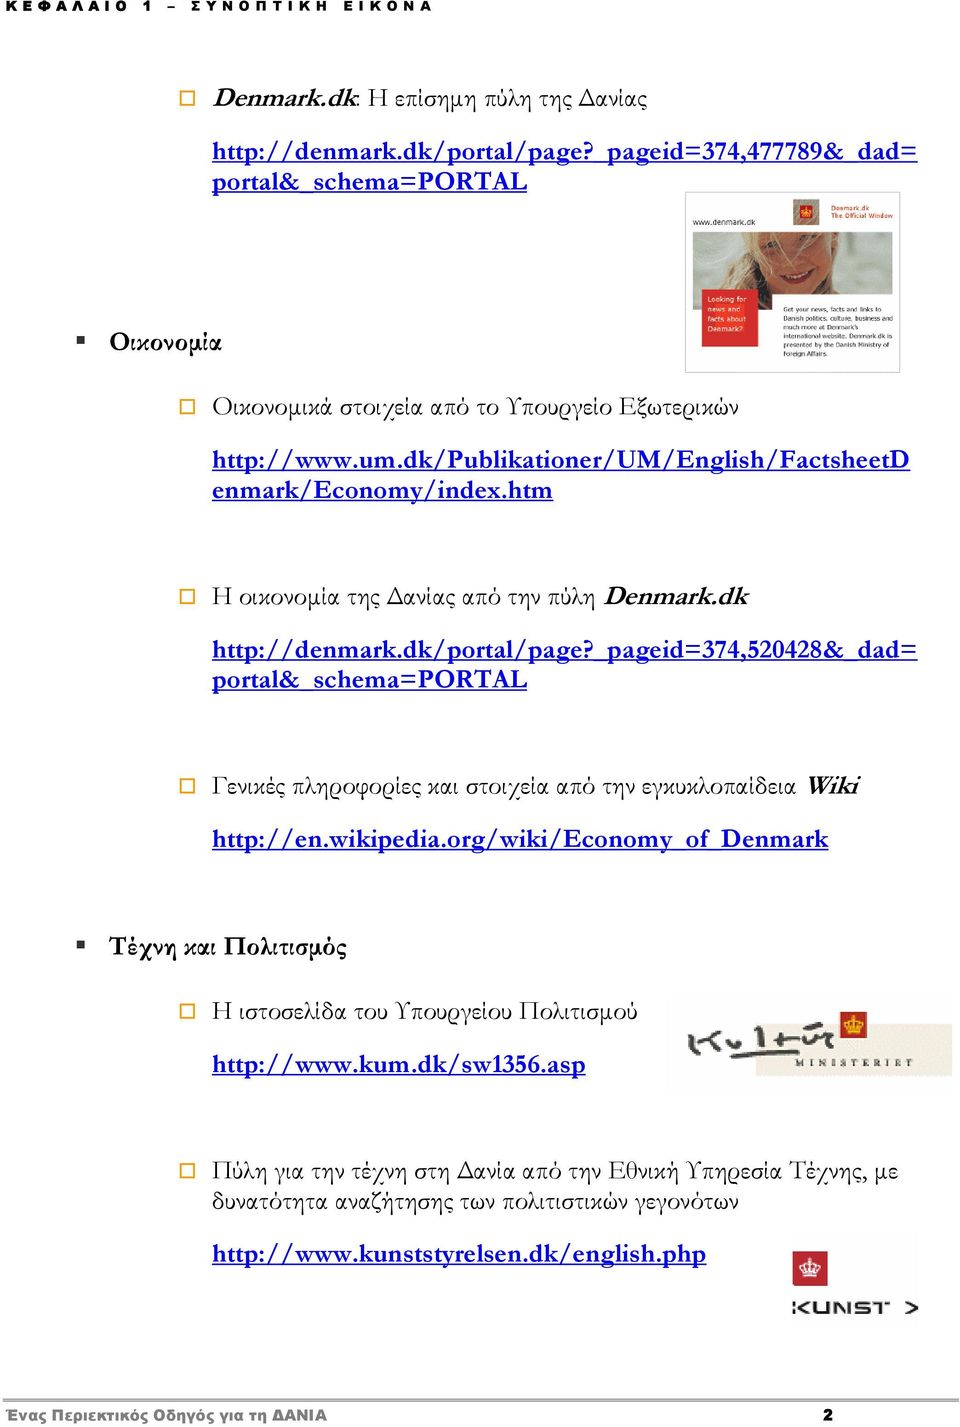 htm Η οικονομία της Δανίας από την πύλη Denmark.dk http://denmark.dk/portal/page?_pageid=374,520428&_dad= portal&_schema=portal Γενικές πληροφορίες και στοιχεία από την εγκυκλοπαίδεια Wiki http://en.